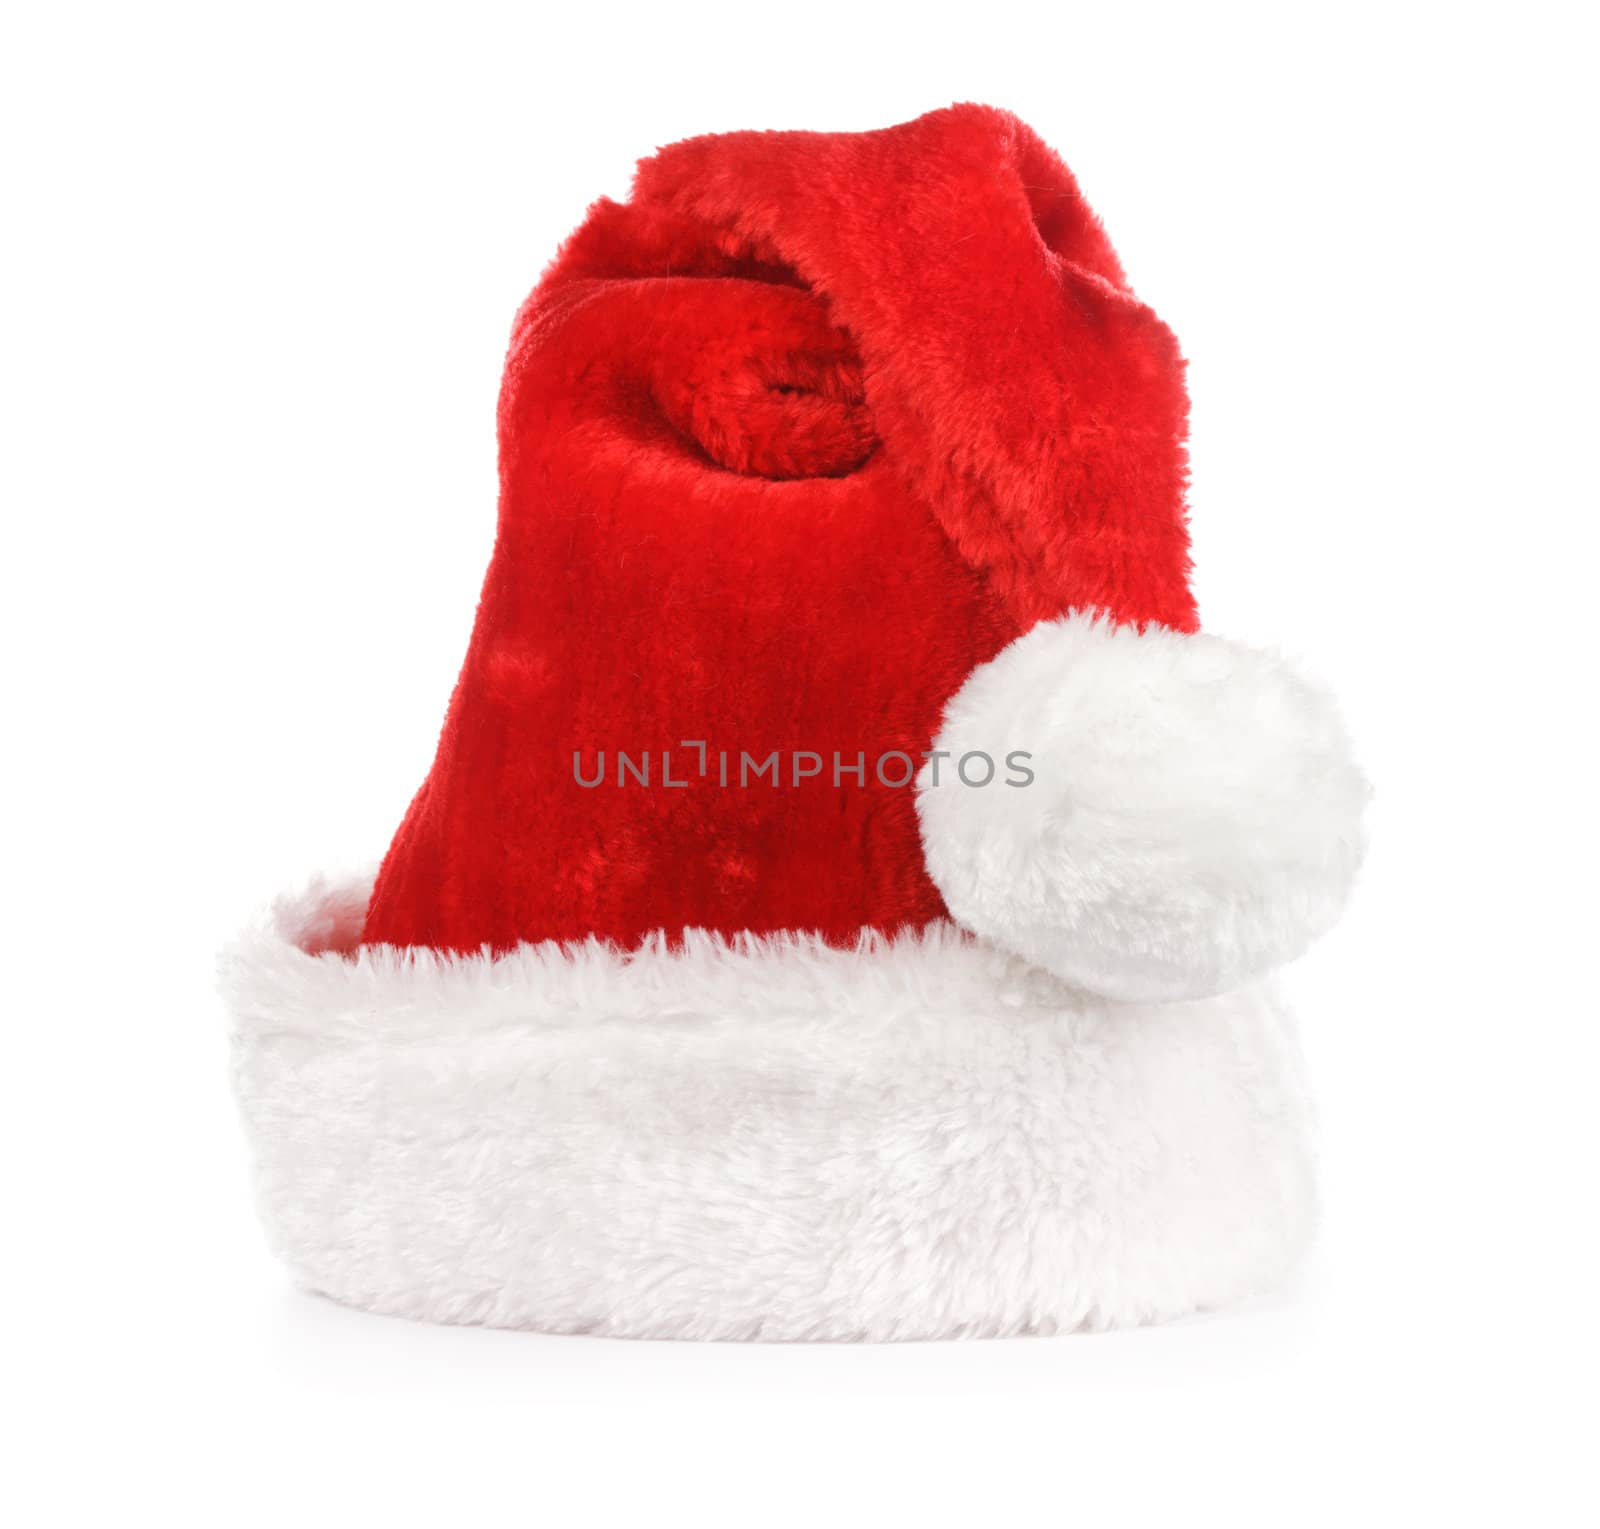 Santa red hat on white background by Bedolaga